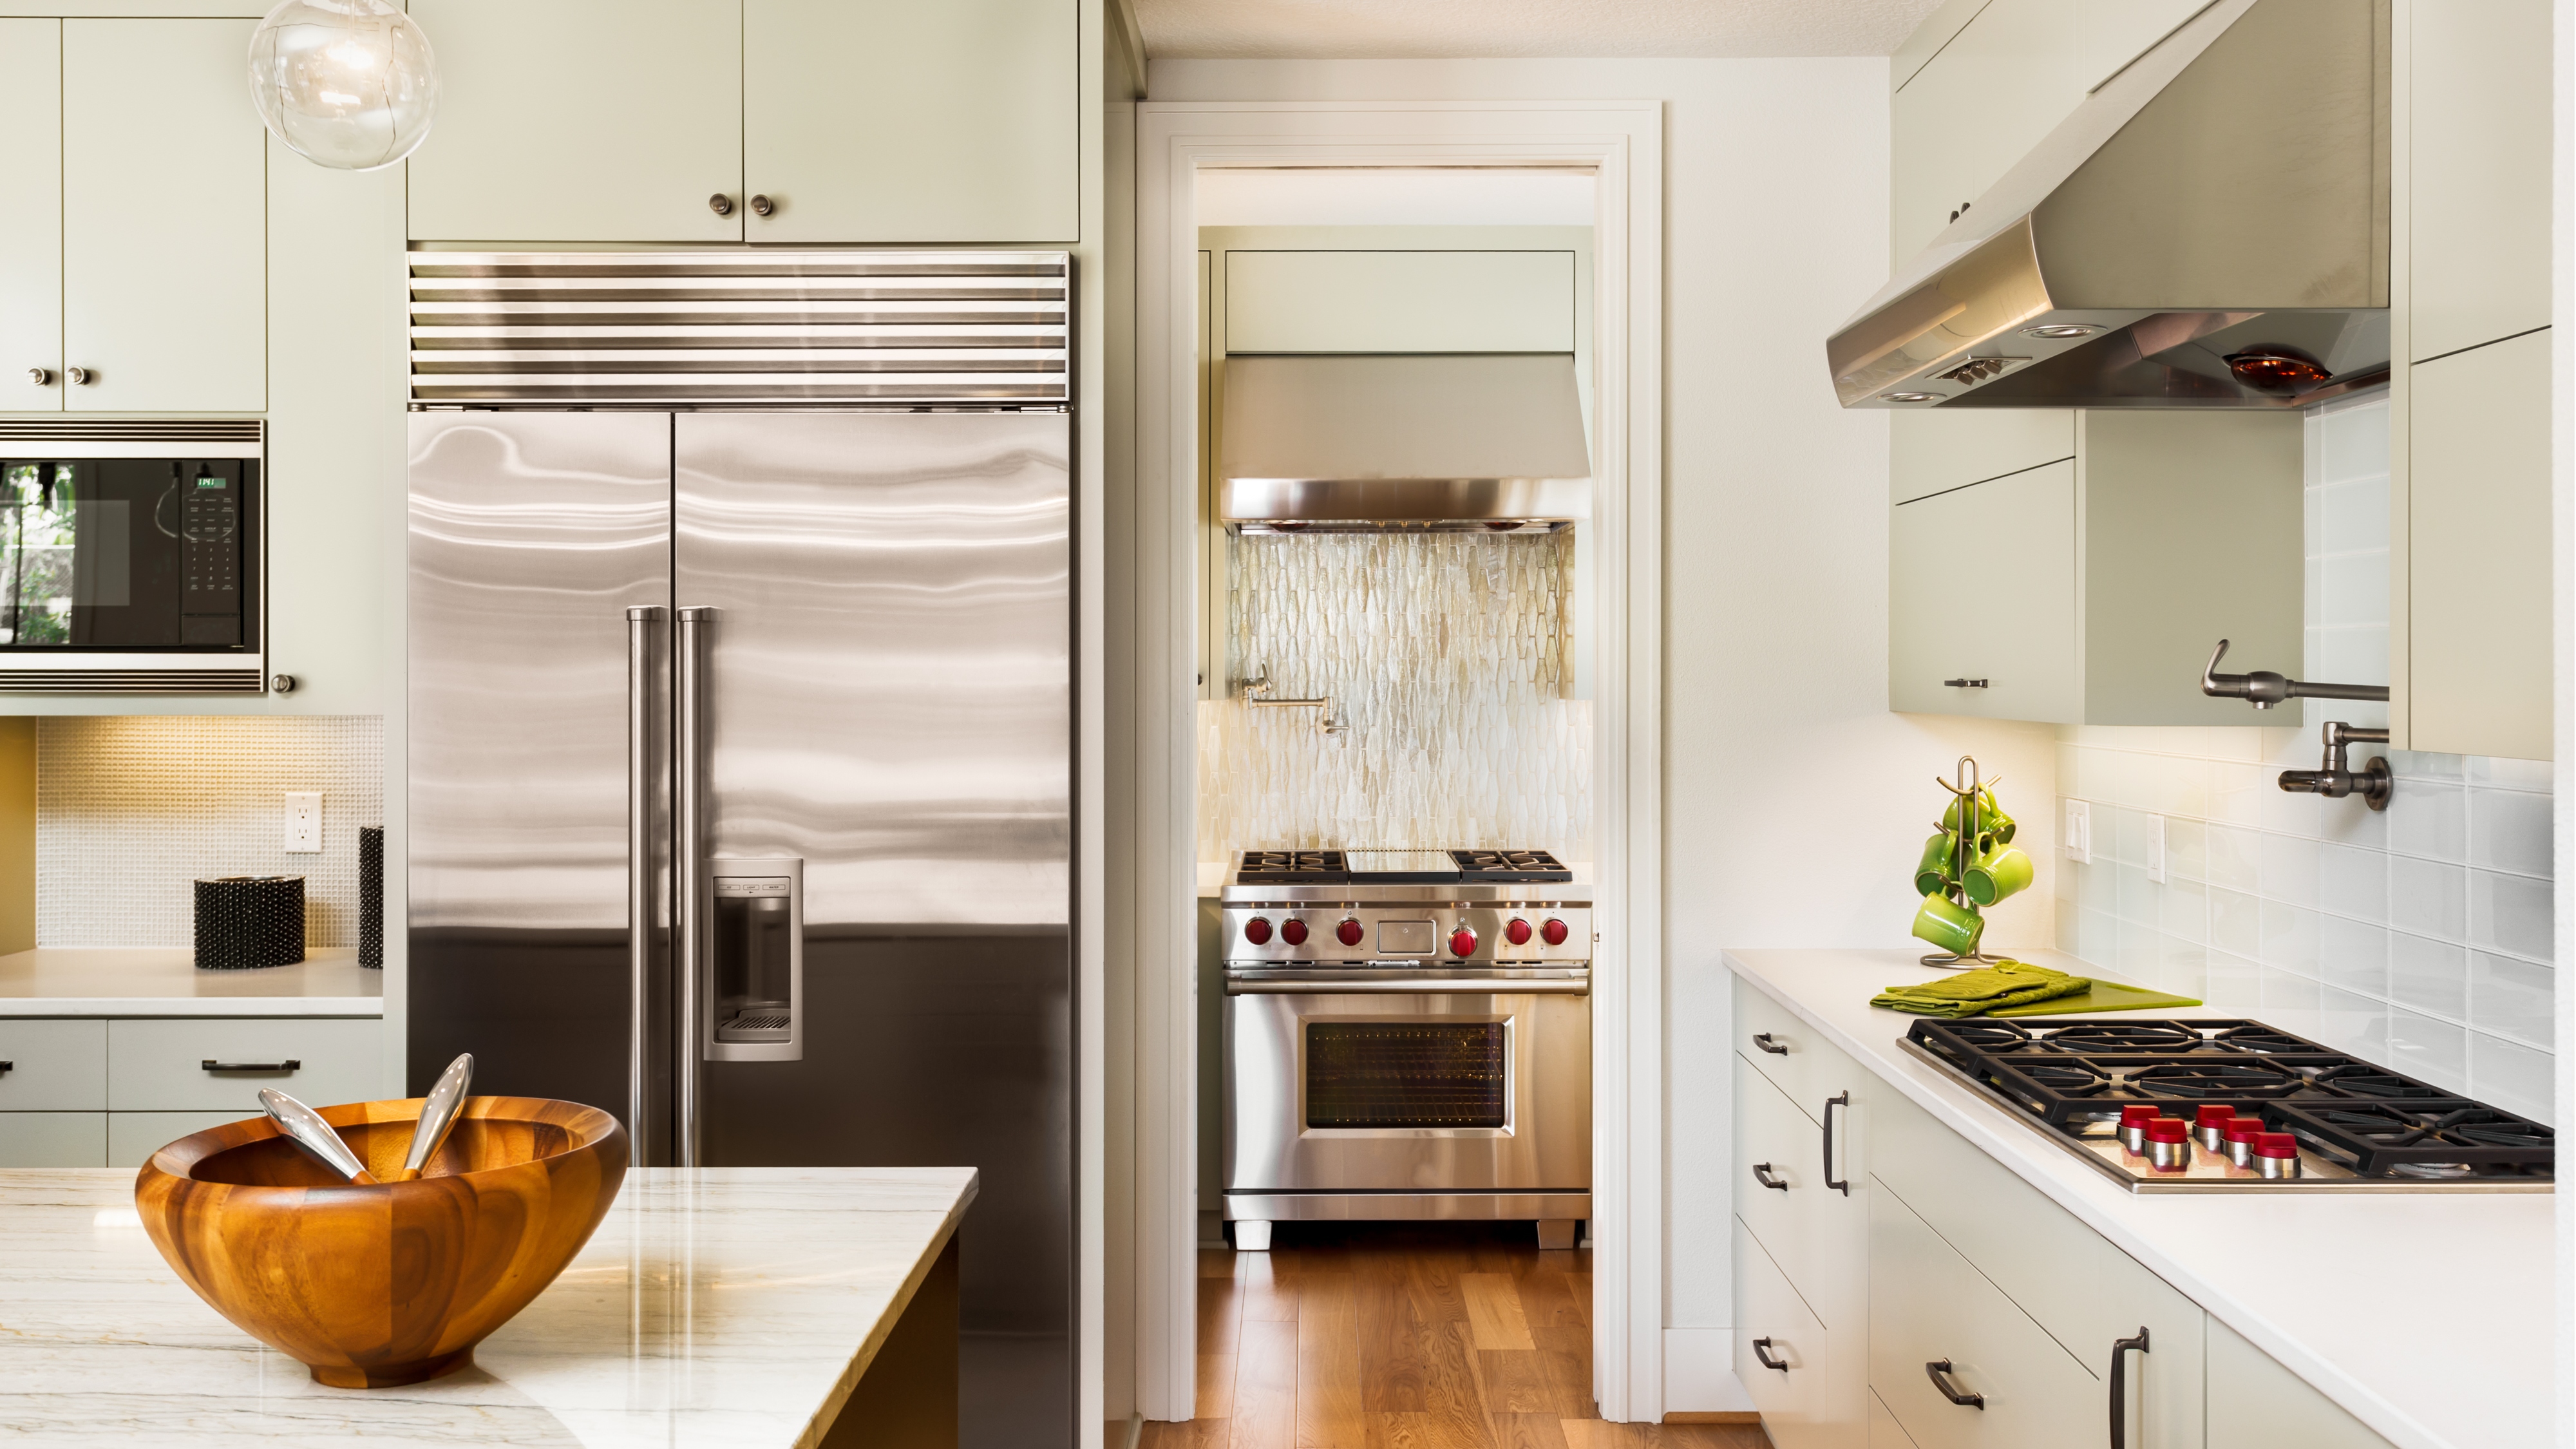 luxurious kitchen with appliances